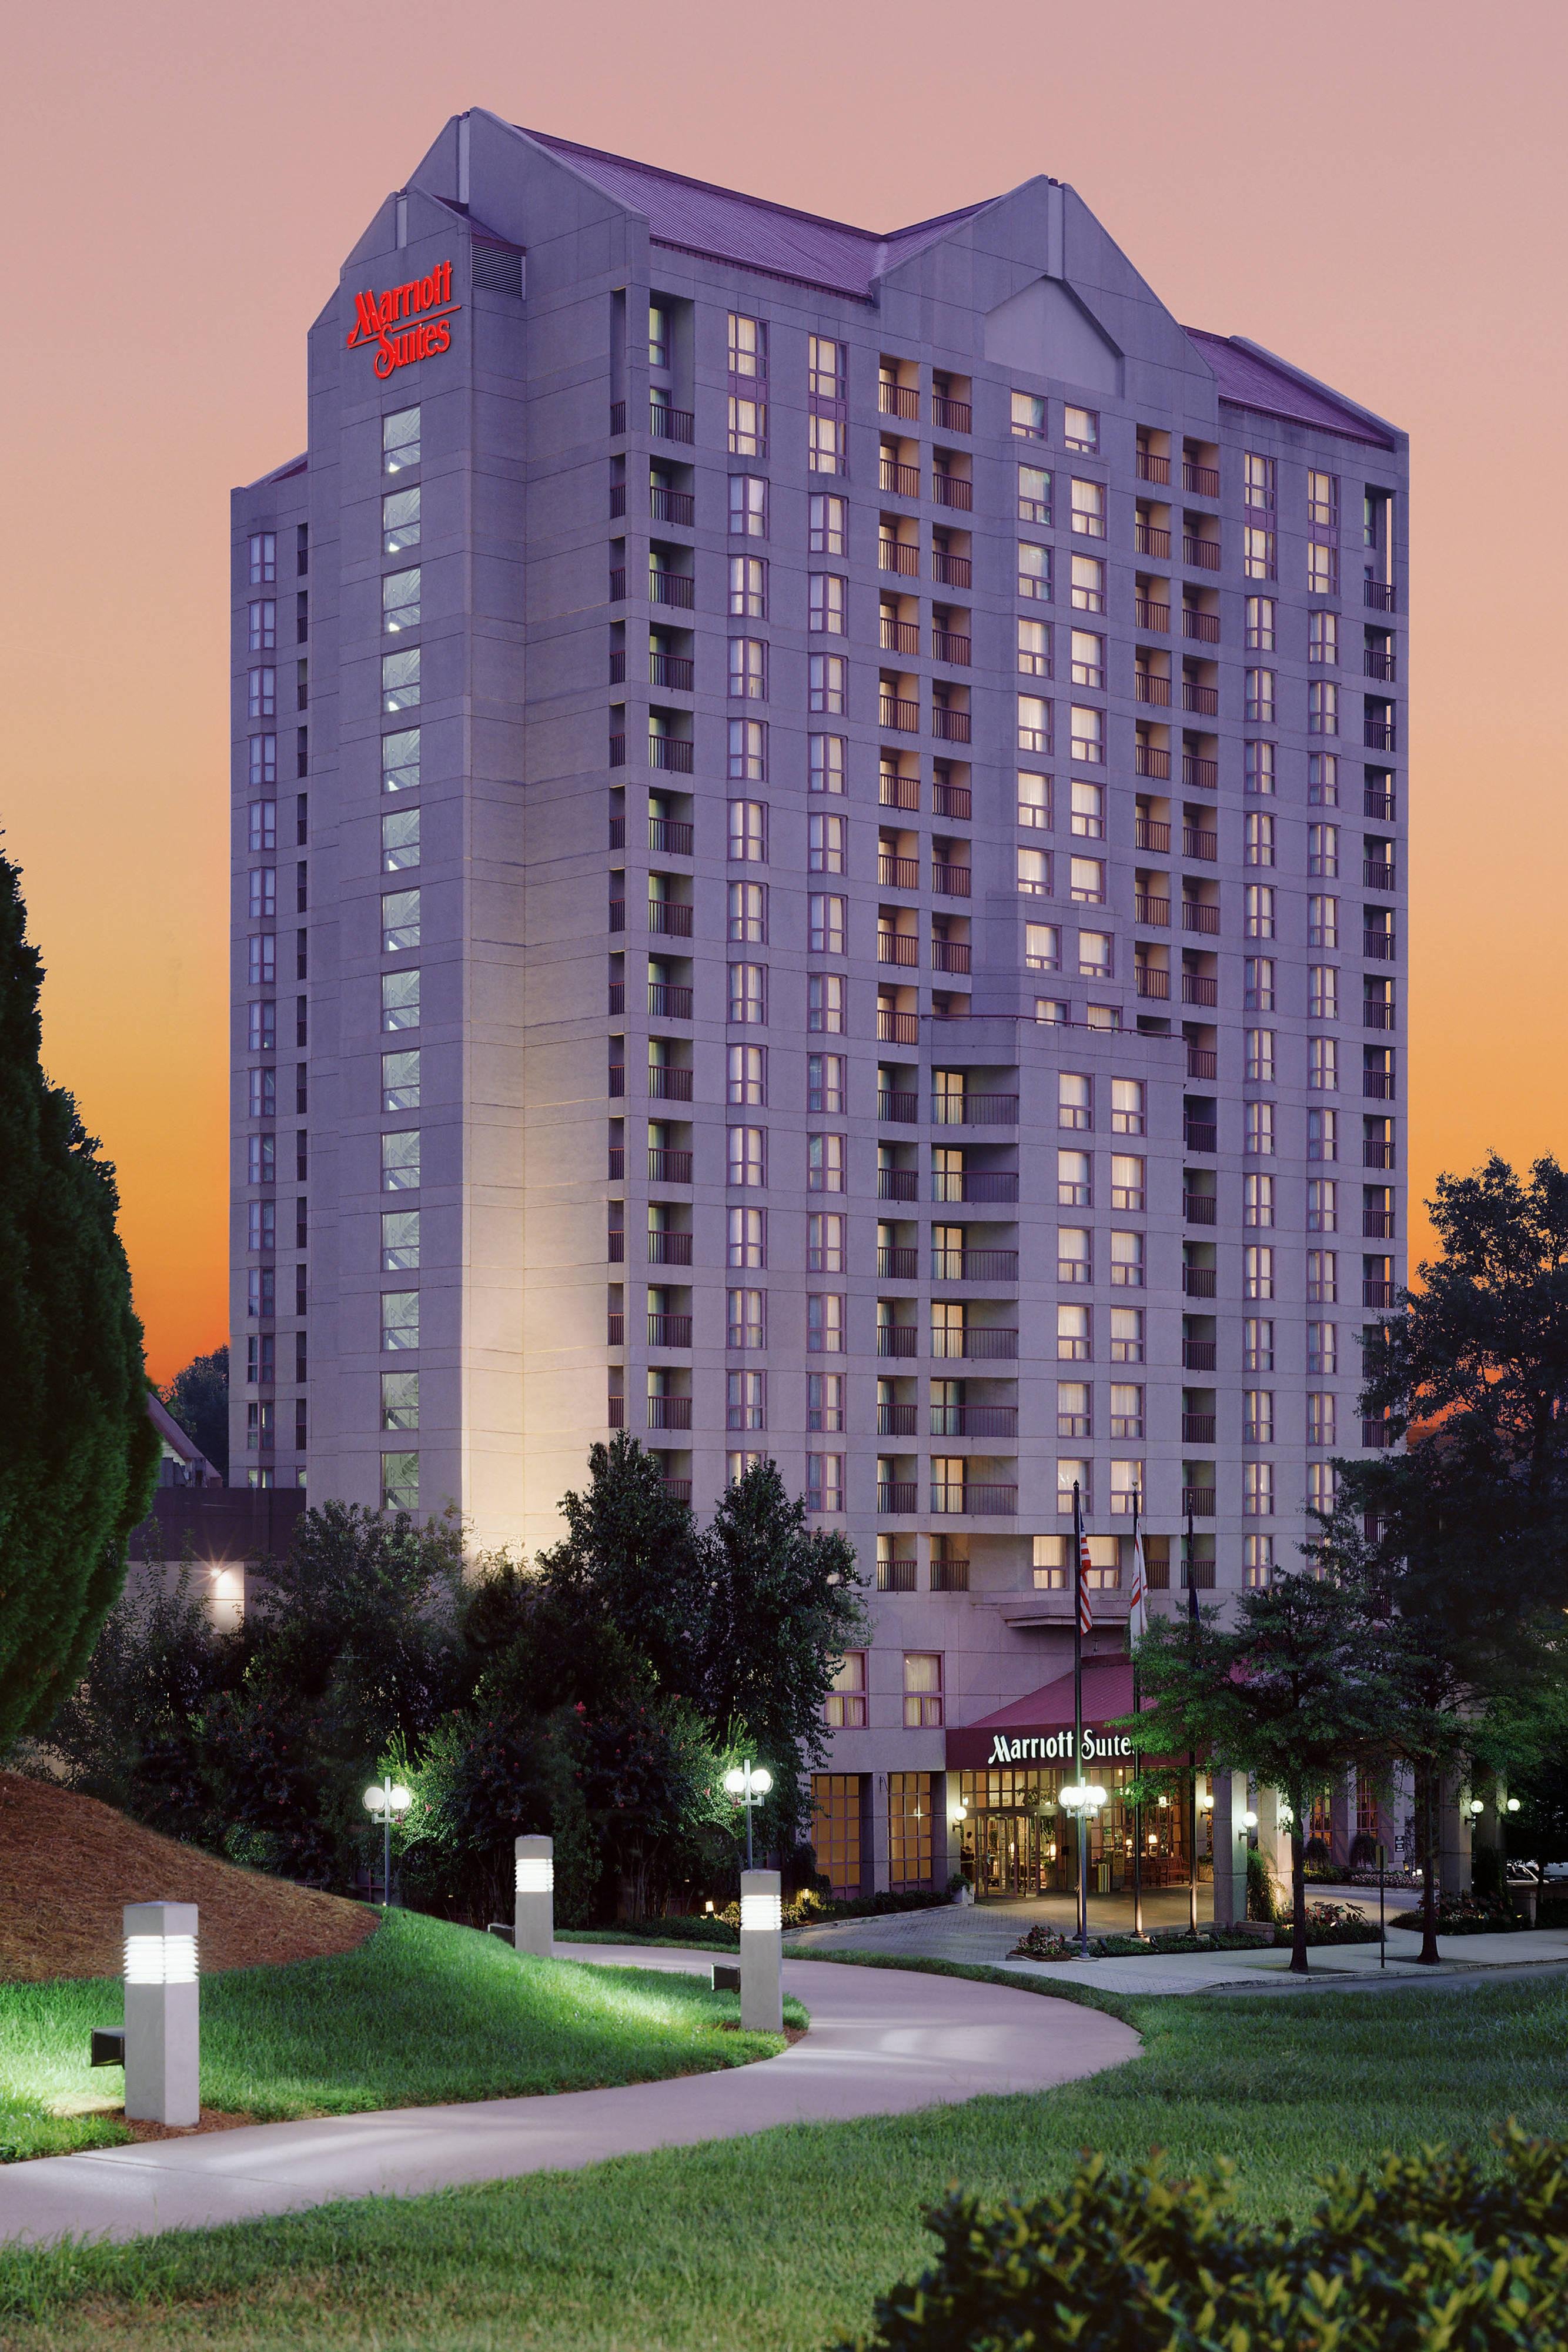 Atlanta Marriott Suites Midtown Atlanta Ga Hotels First Class Hotels